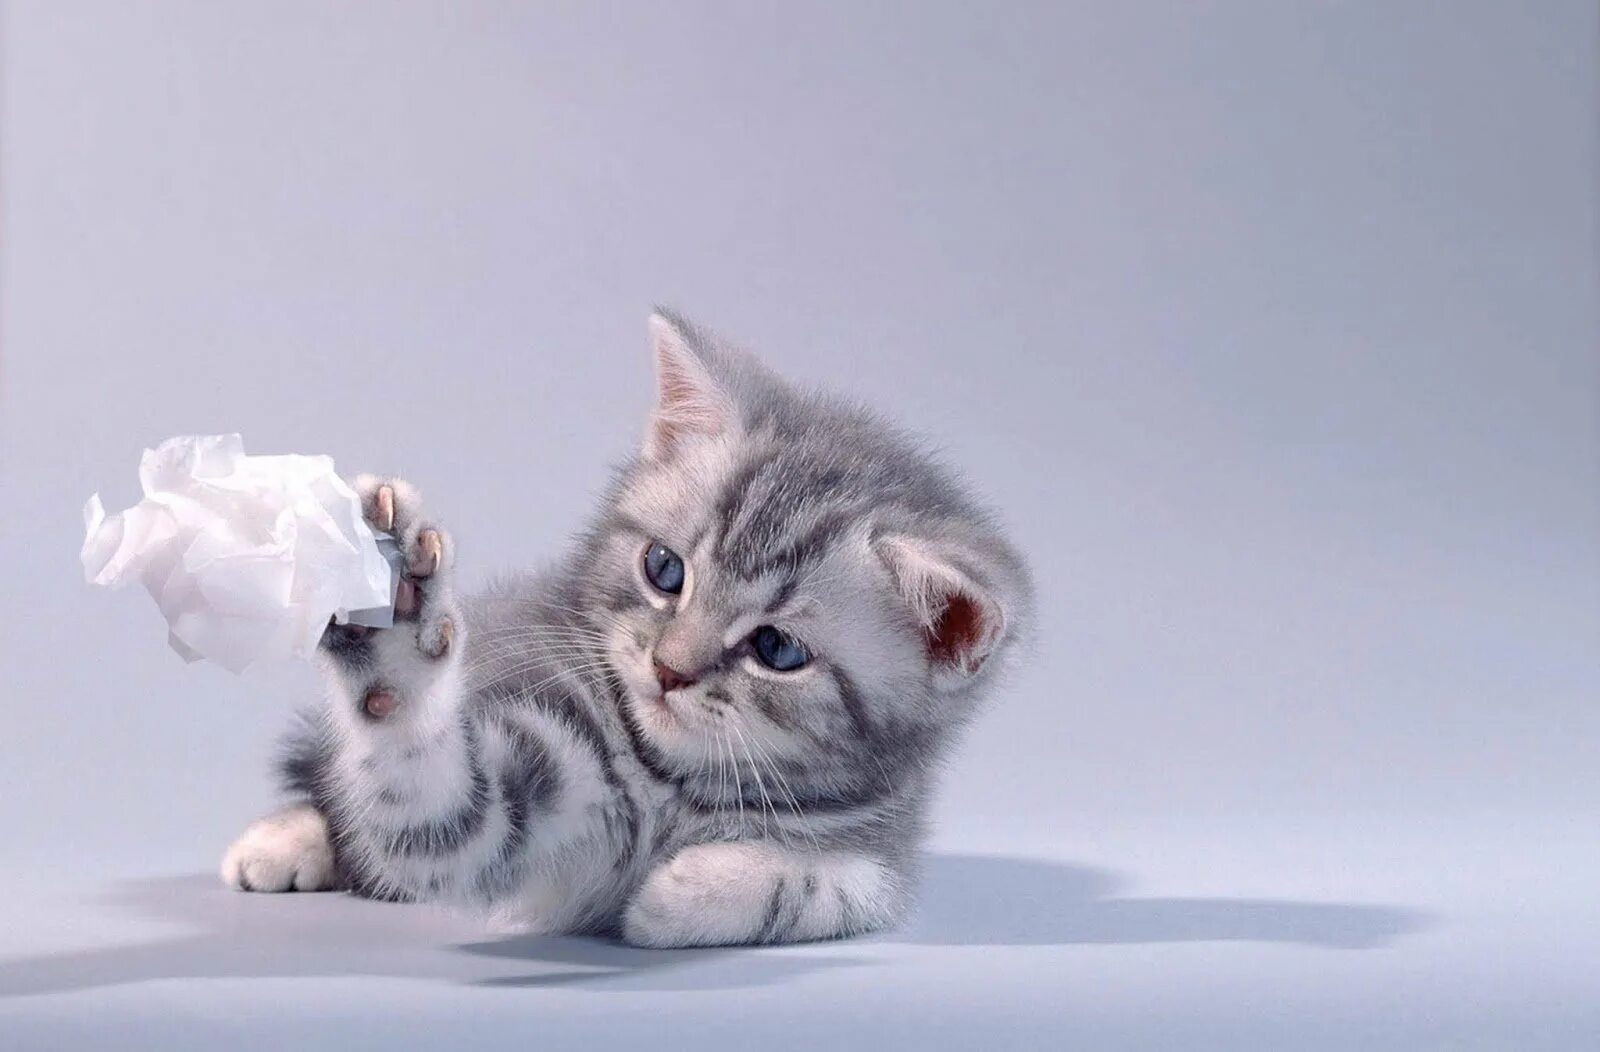 Музыка из рекламы вискас. Реклама с котиками. Котик из рекламы. Реклама с котенком. Whiskas для котят.